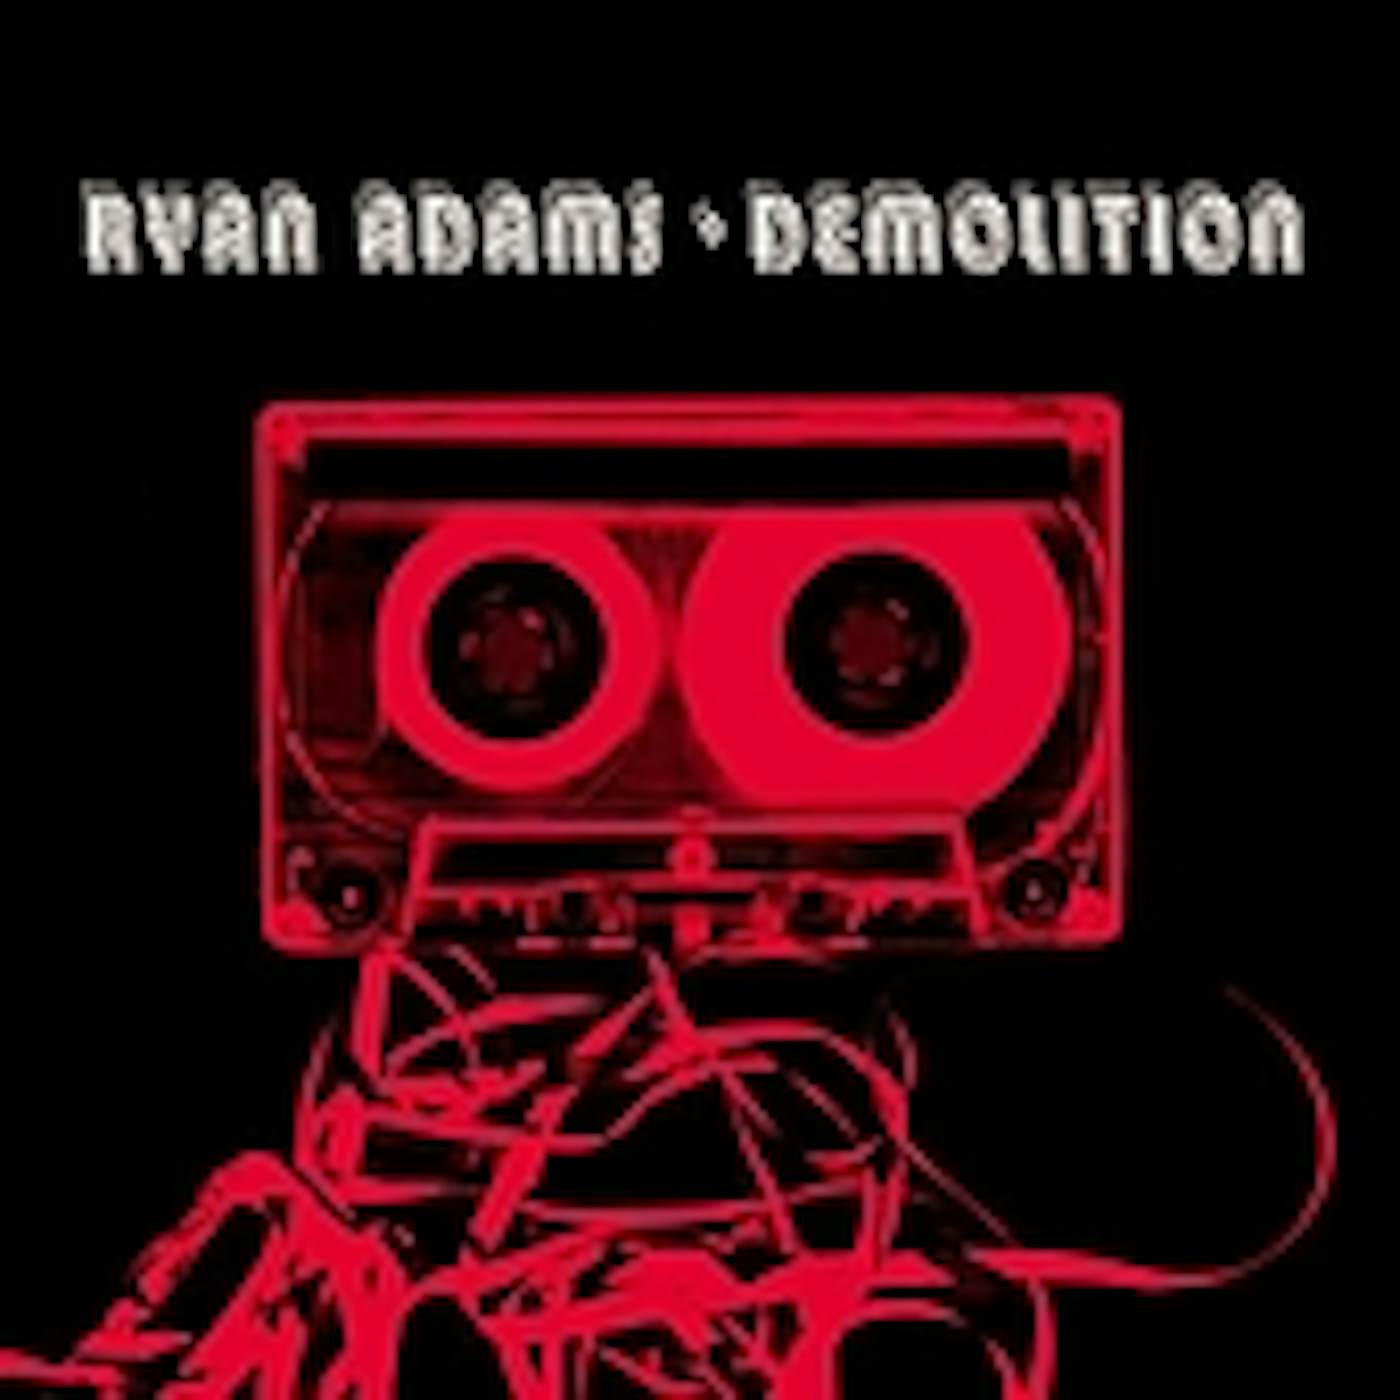 Ryan Adams DEMOLITION CD